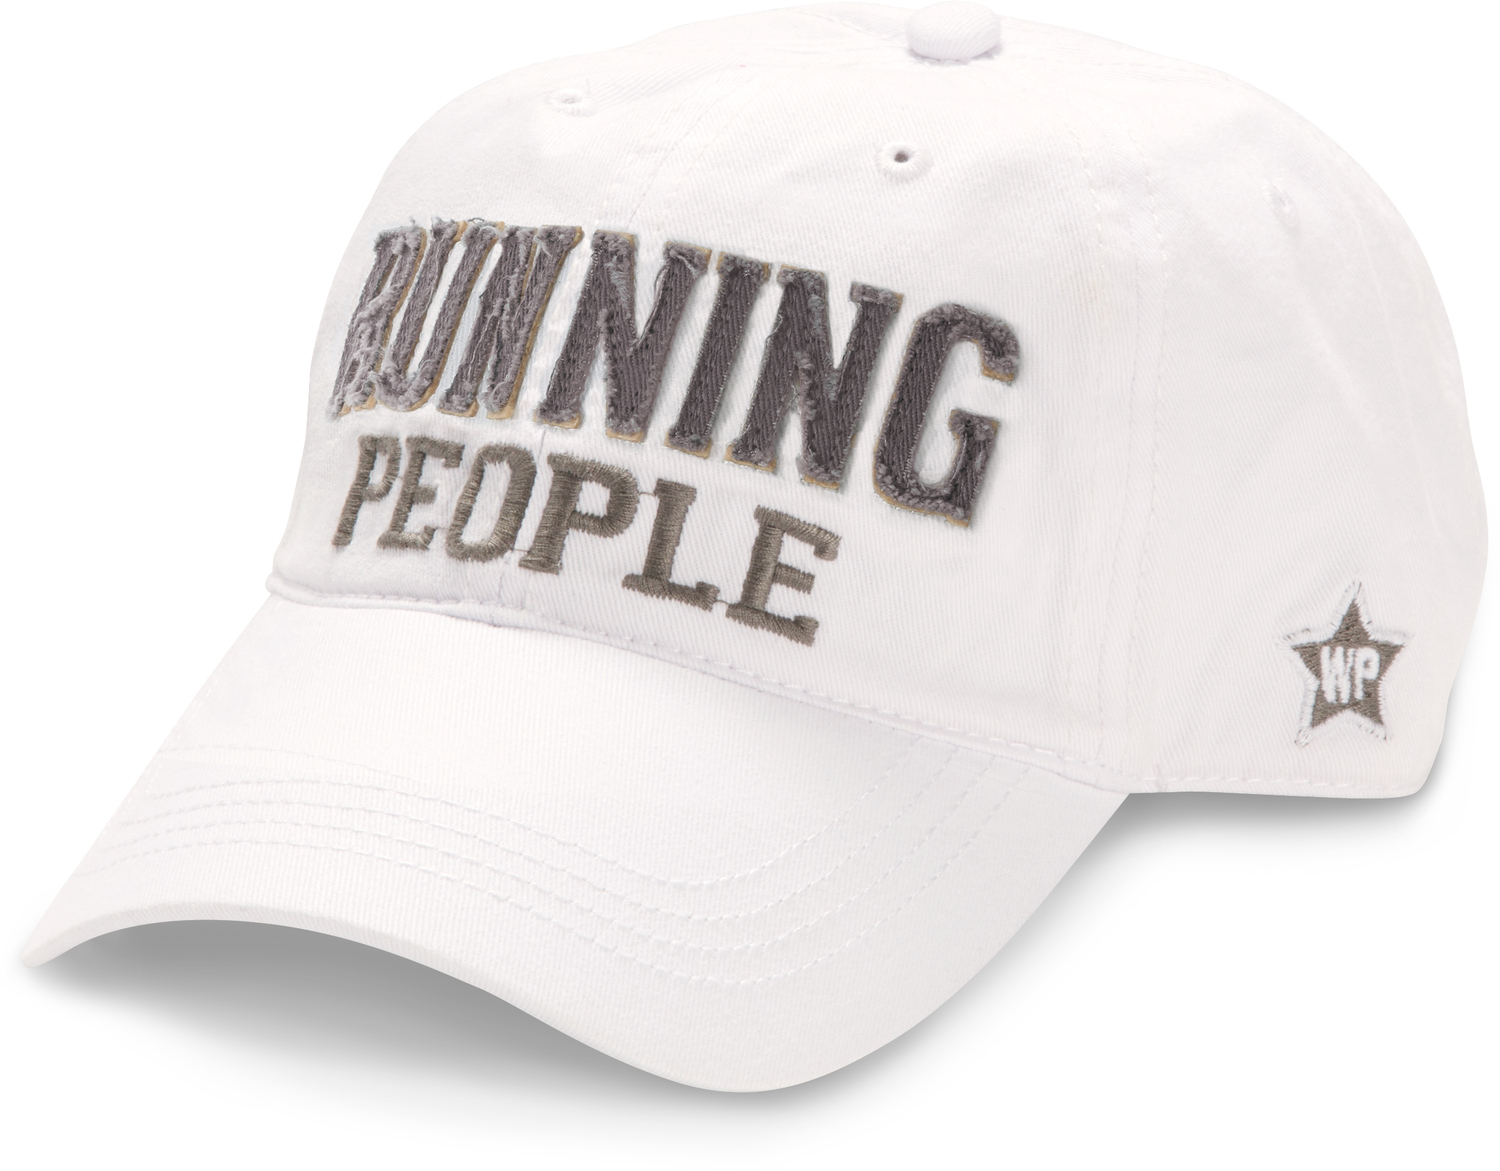 Running People by We People - Running People - White Adjustable Hat